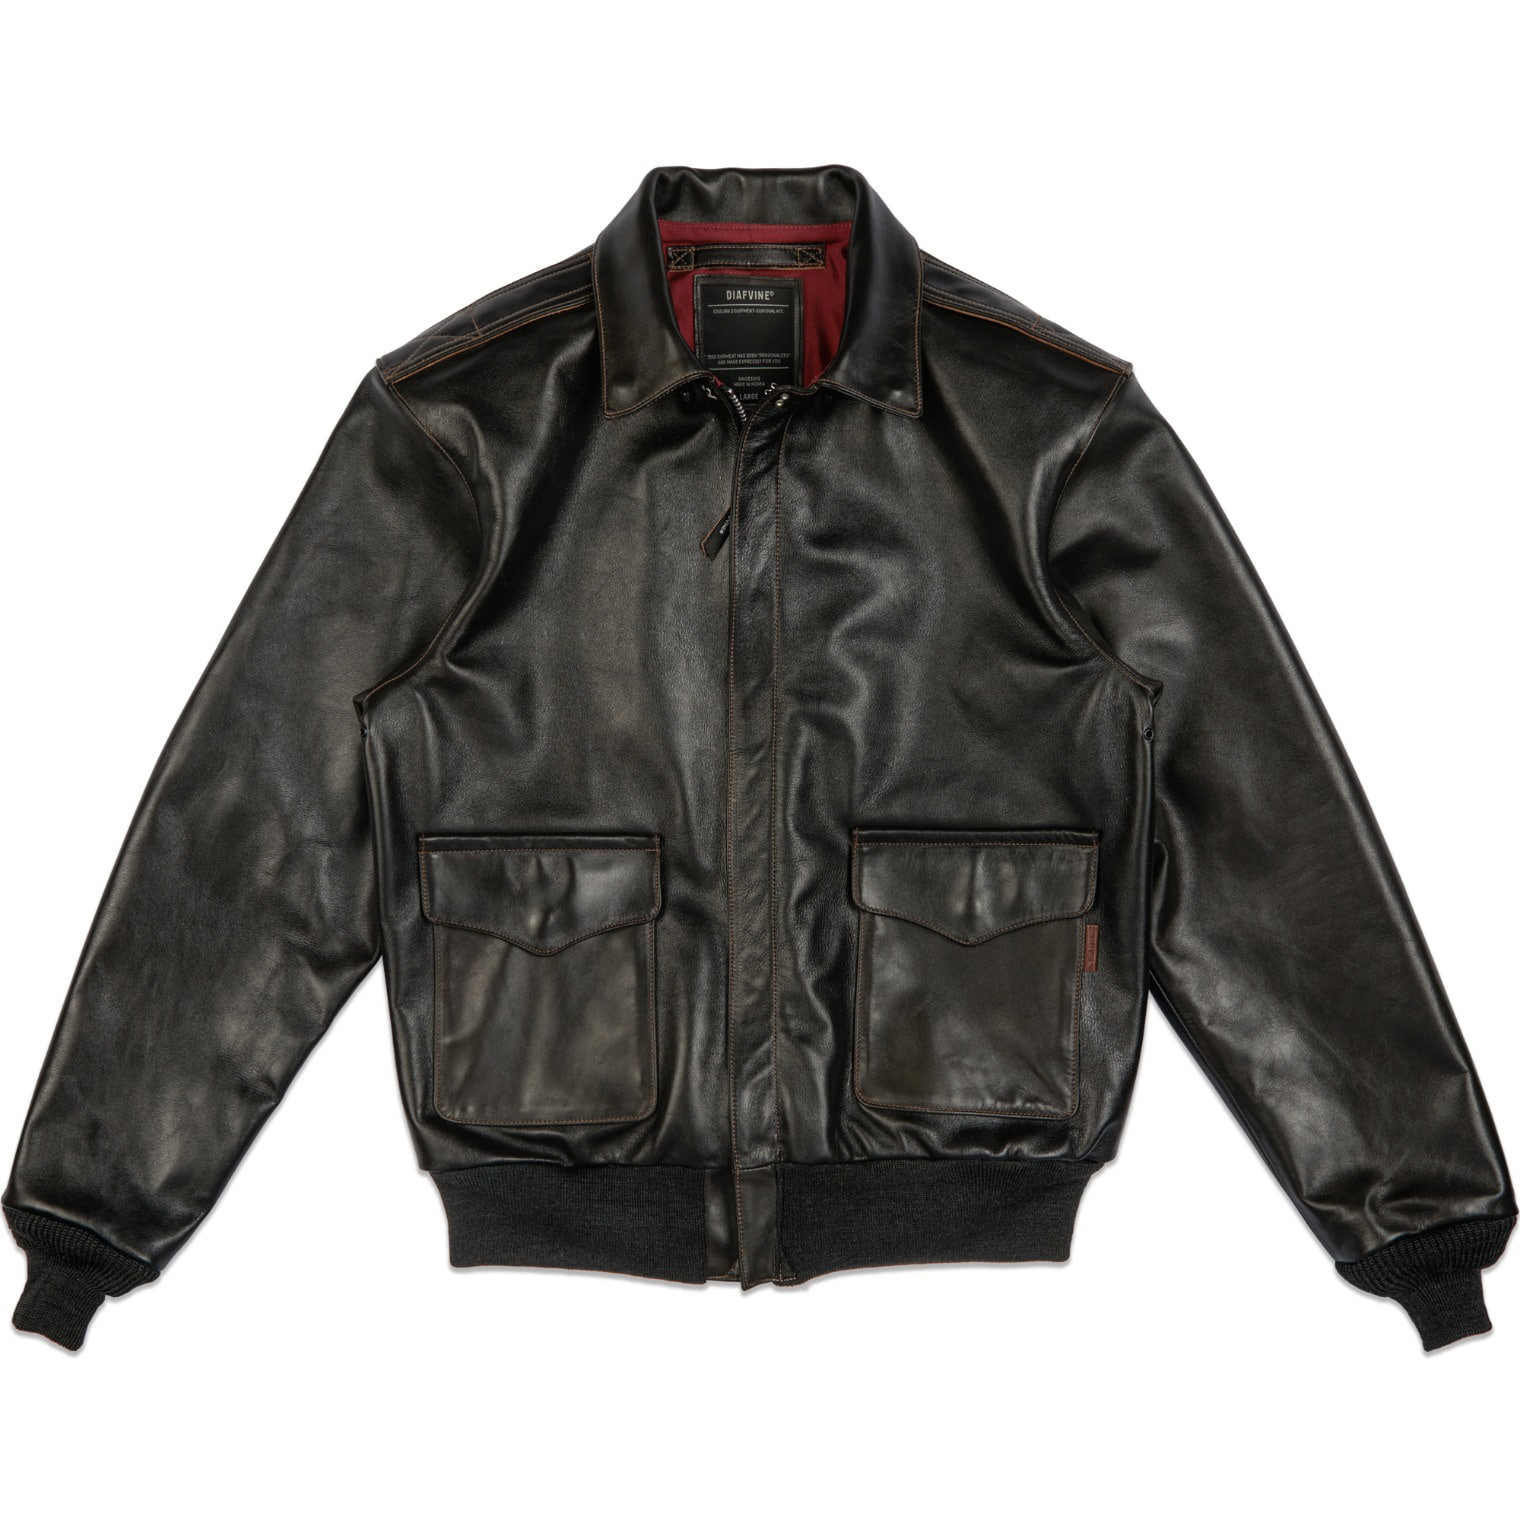 DV.LOT 695 Type A-2 Flight jacket -Black/Black rib-